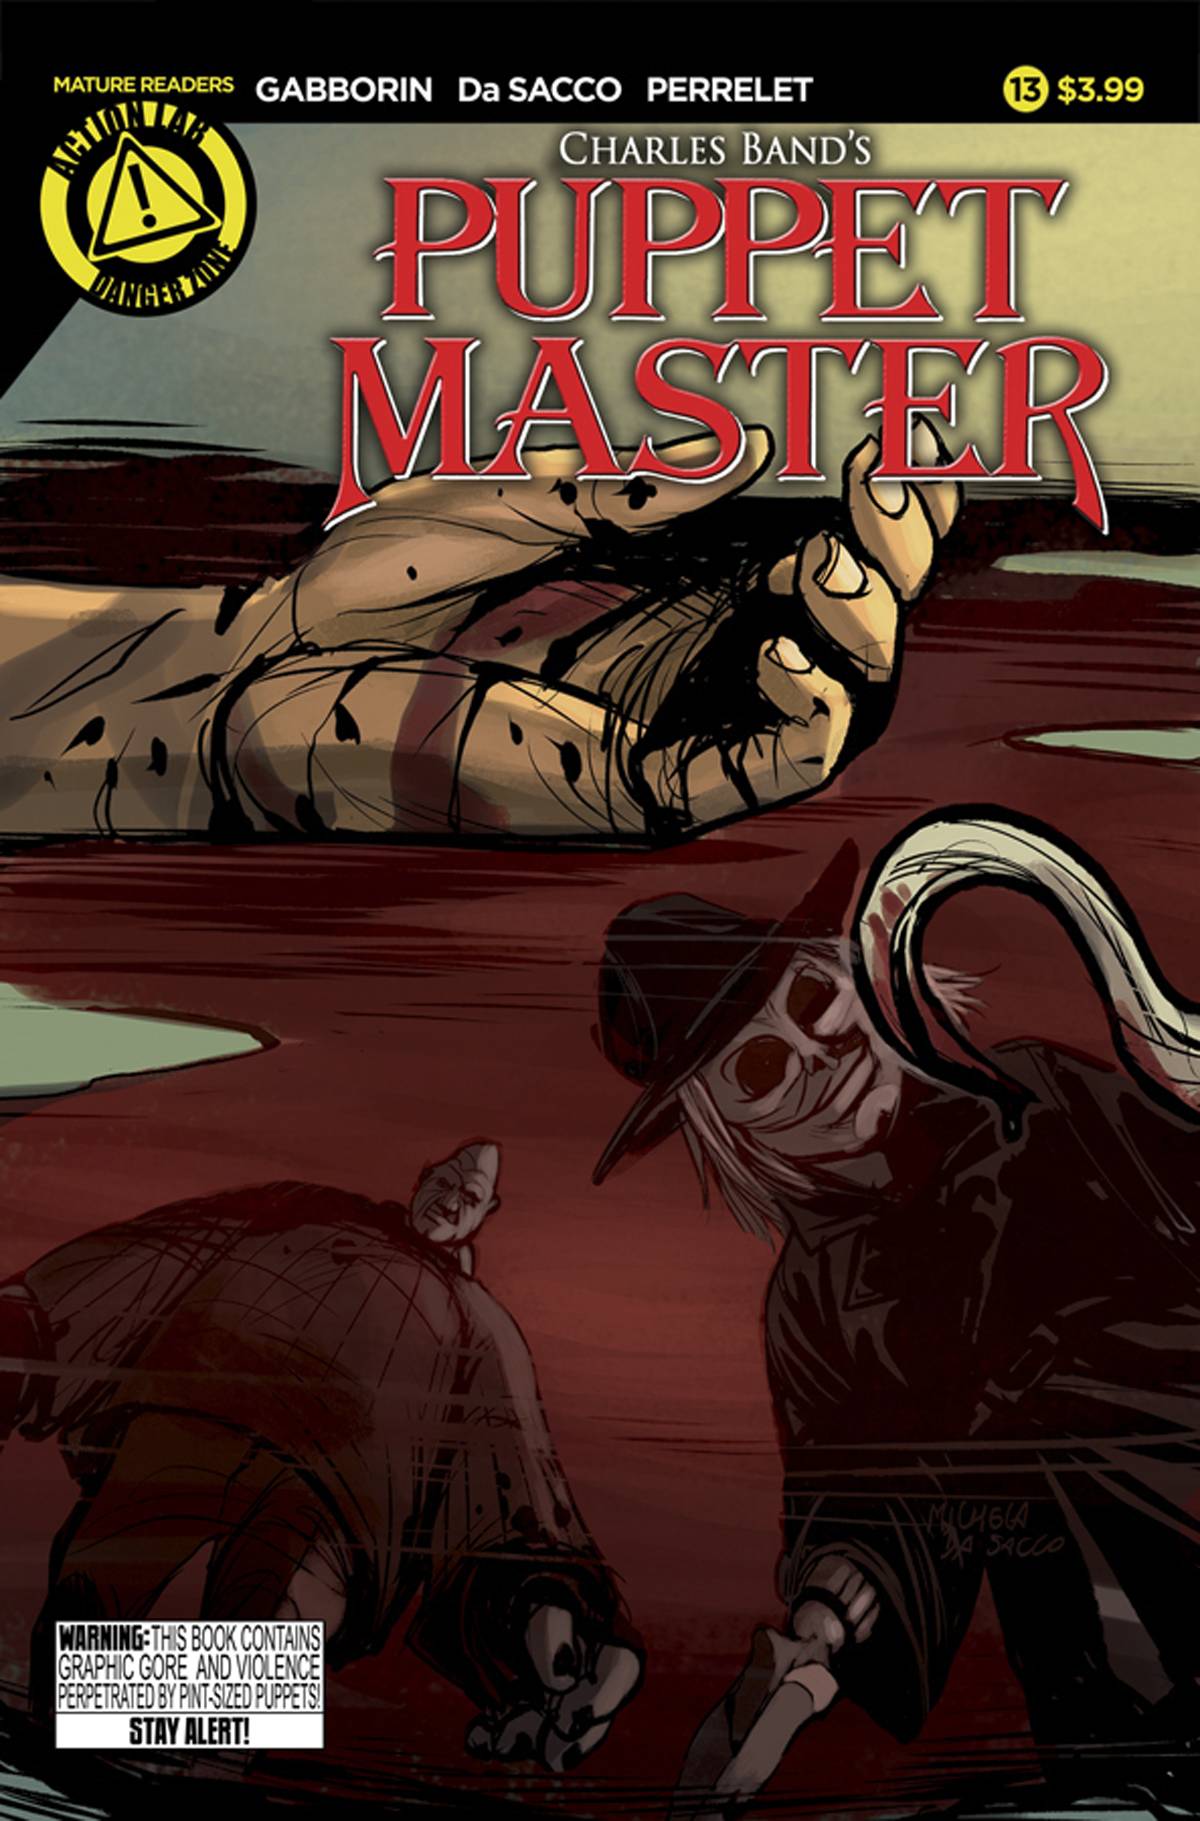 Puppet Master #13 Cover A Da Sacco